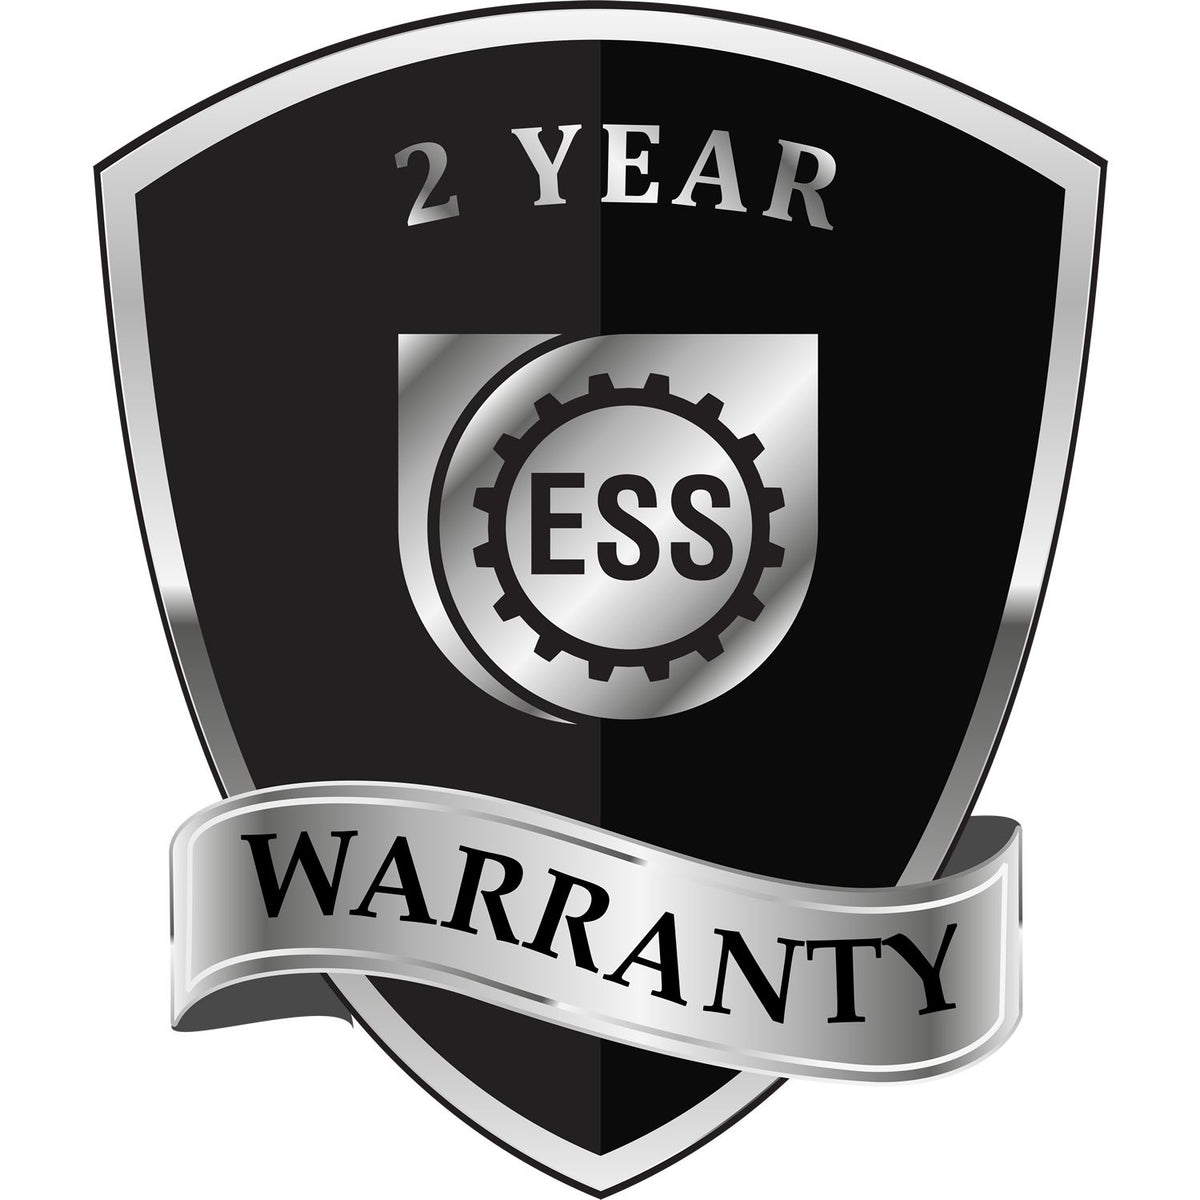 A black and silver badge or emblem showing warranty information for the Hybrid Delaware Landscape Architect Seal